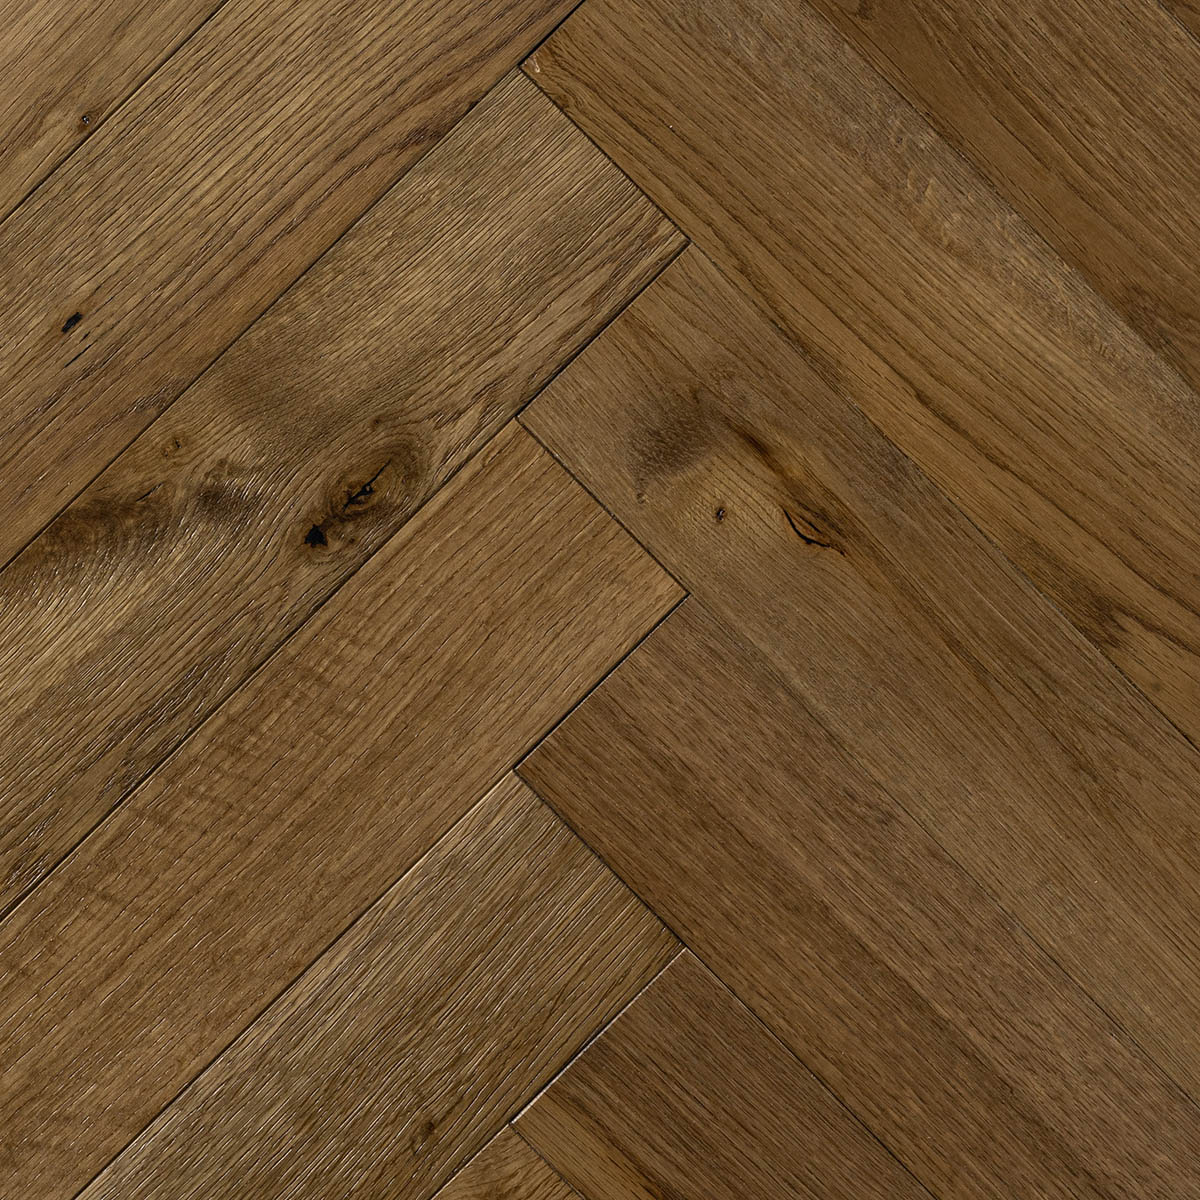 Wedgewood Drive - Rustic-Grade Oak Herringbone Floor 280mm x 70mm